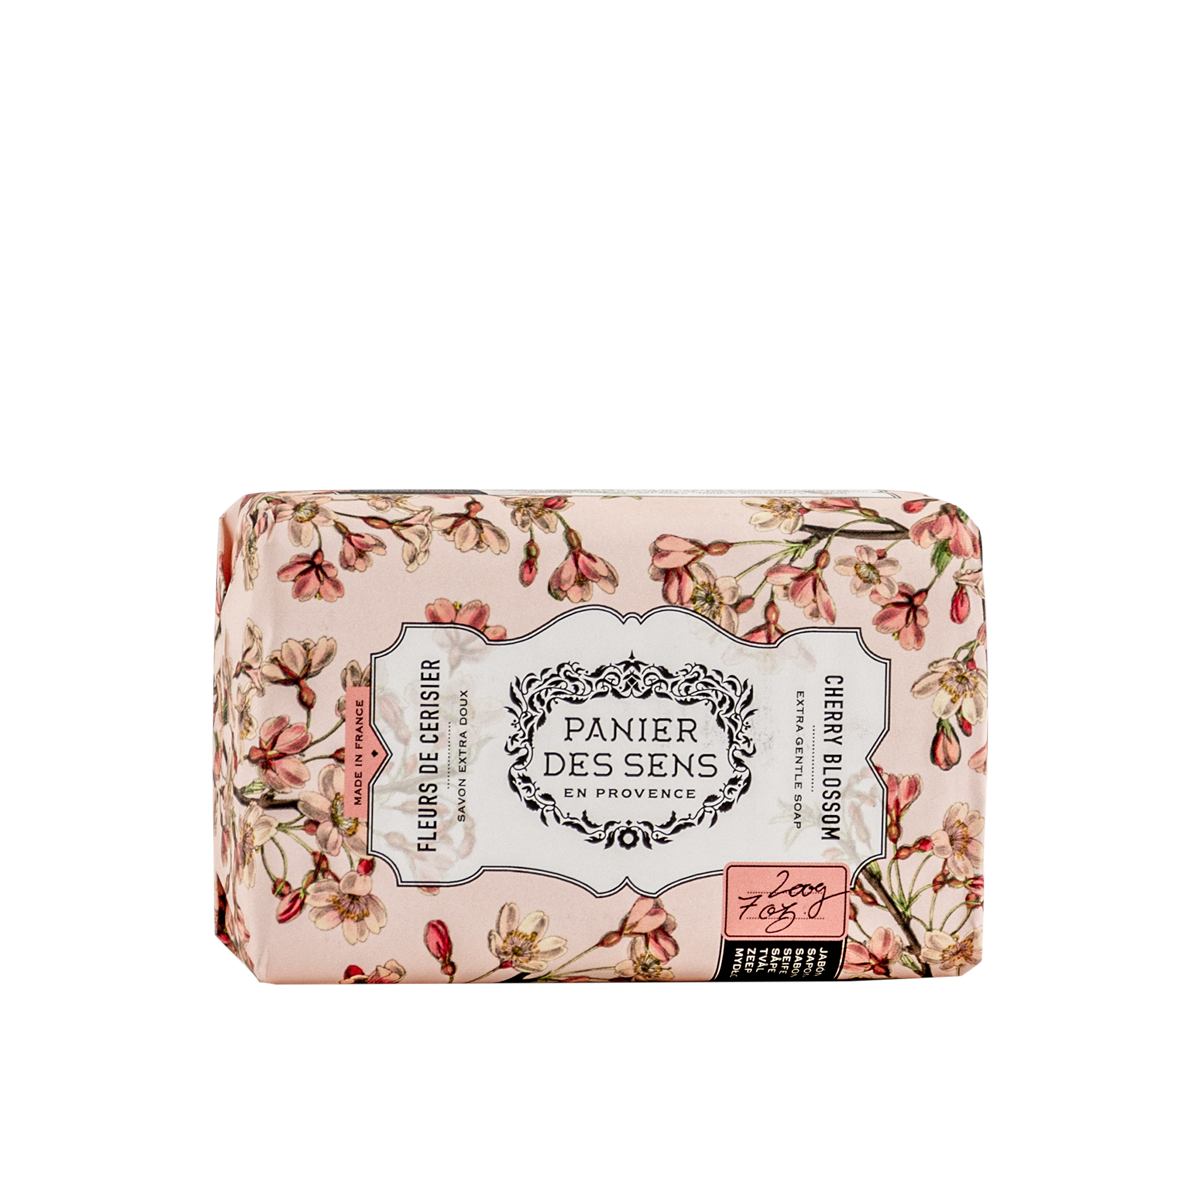 Shea Butter Bar Soap - Cherry Blossom